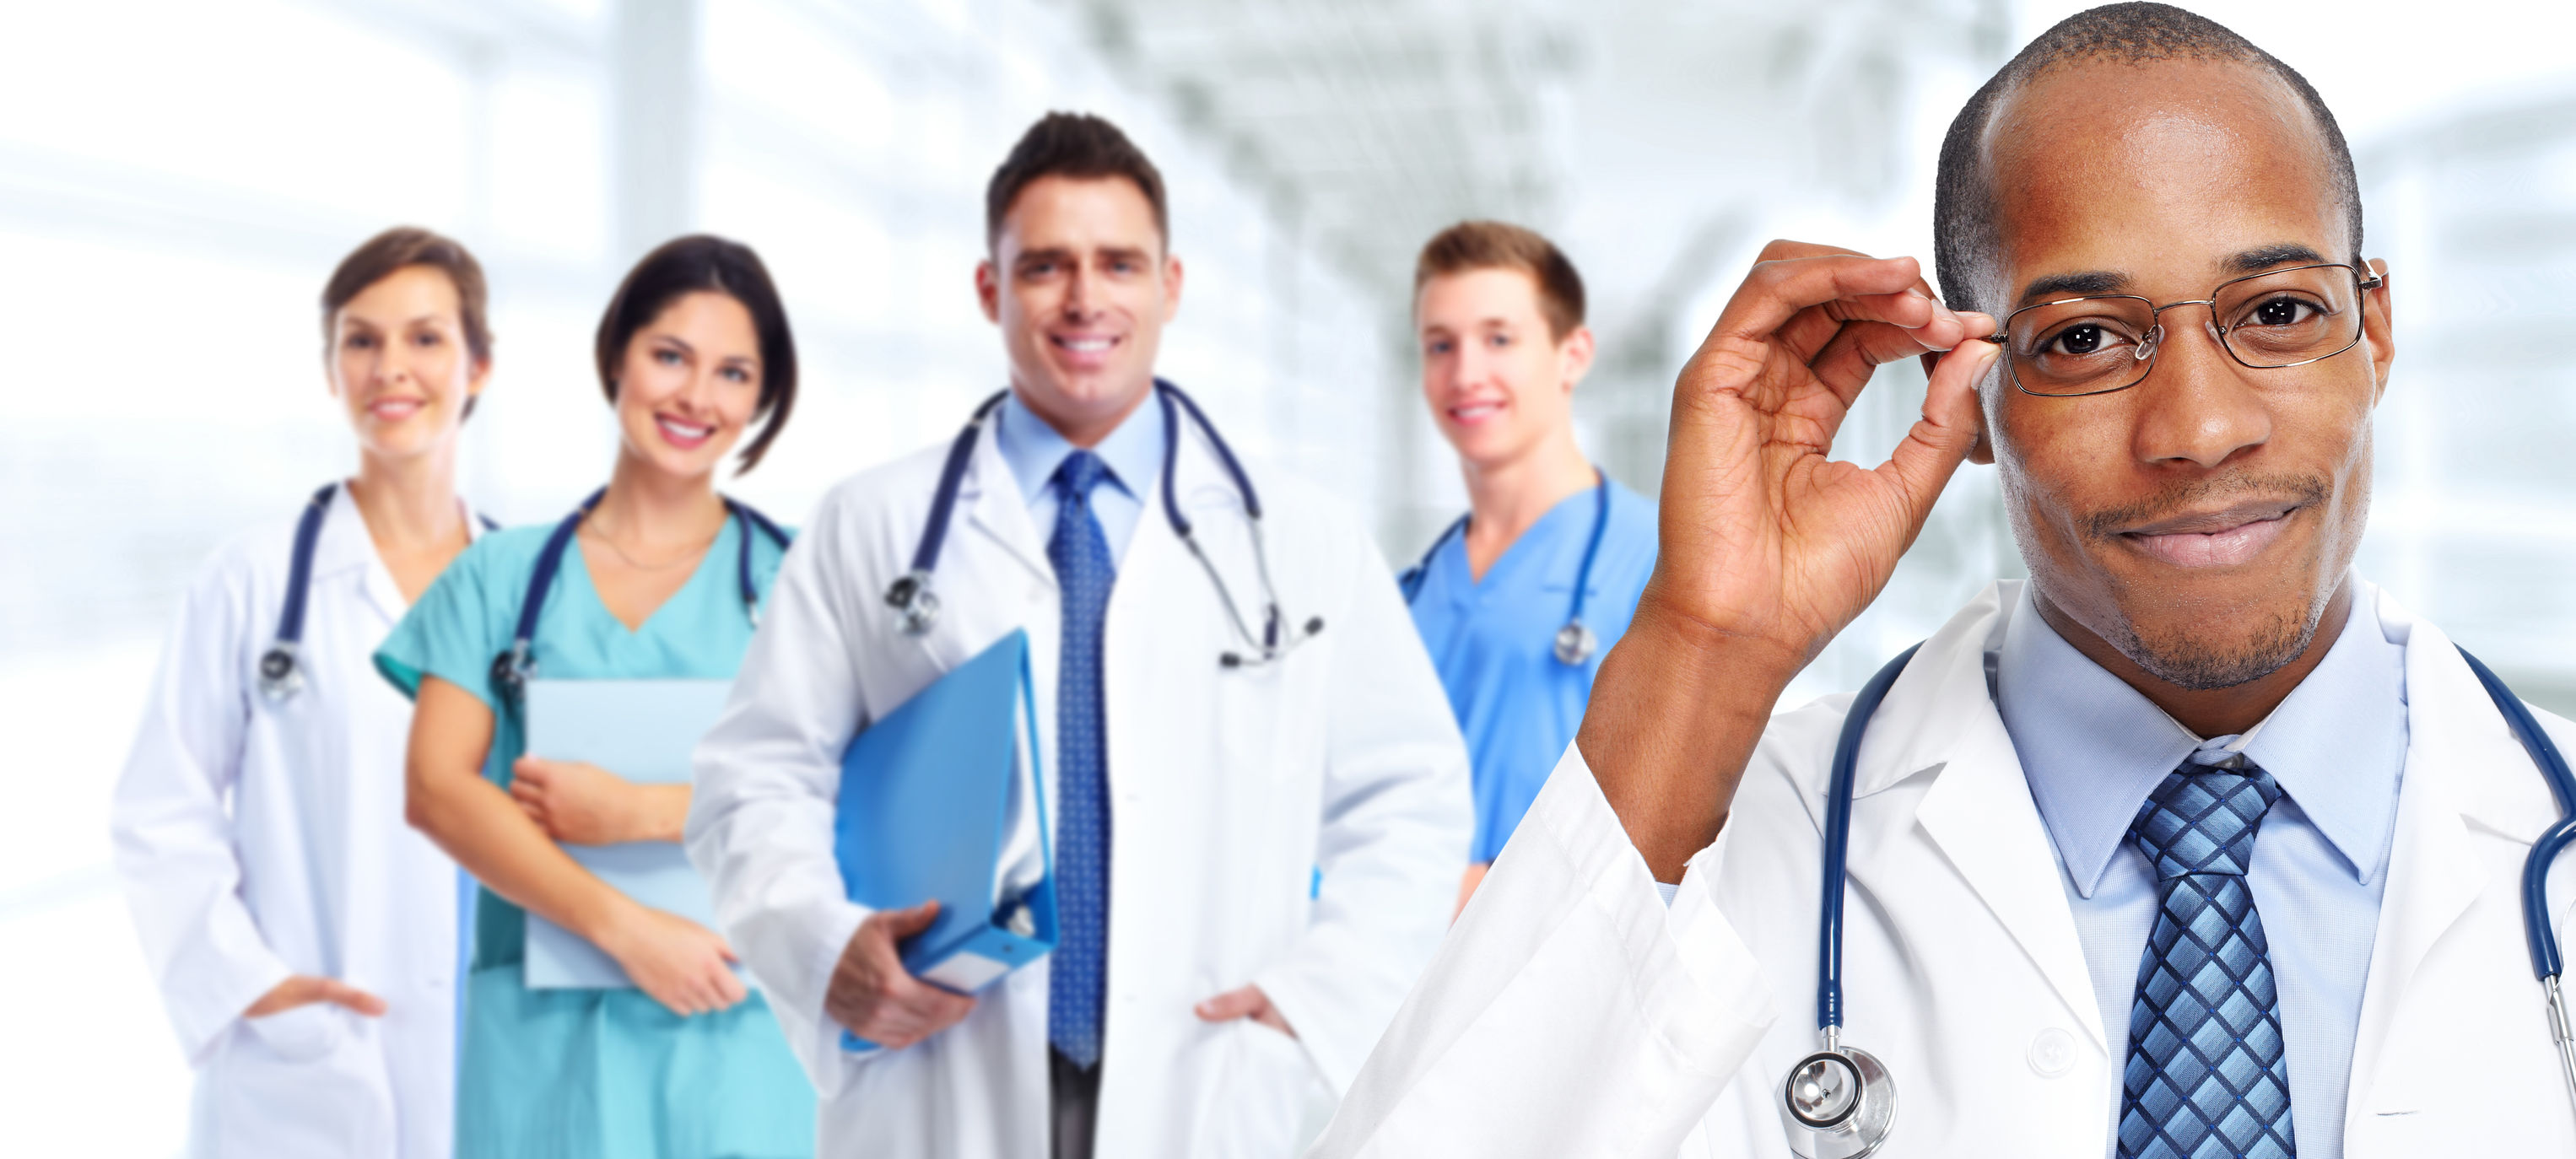 Internal medicine physician jobs in nyc